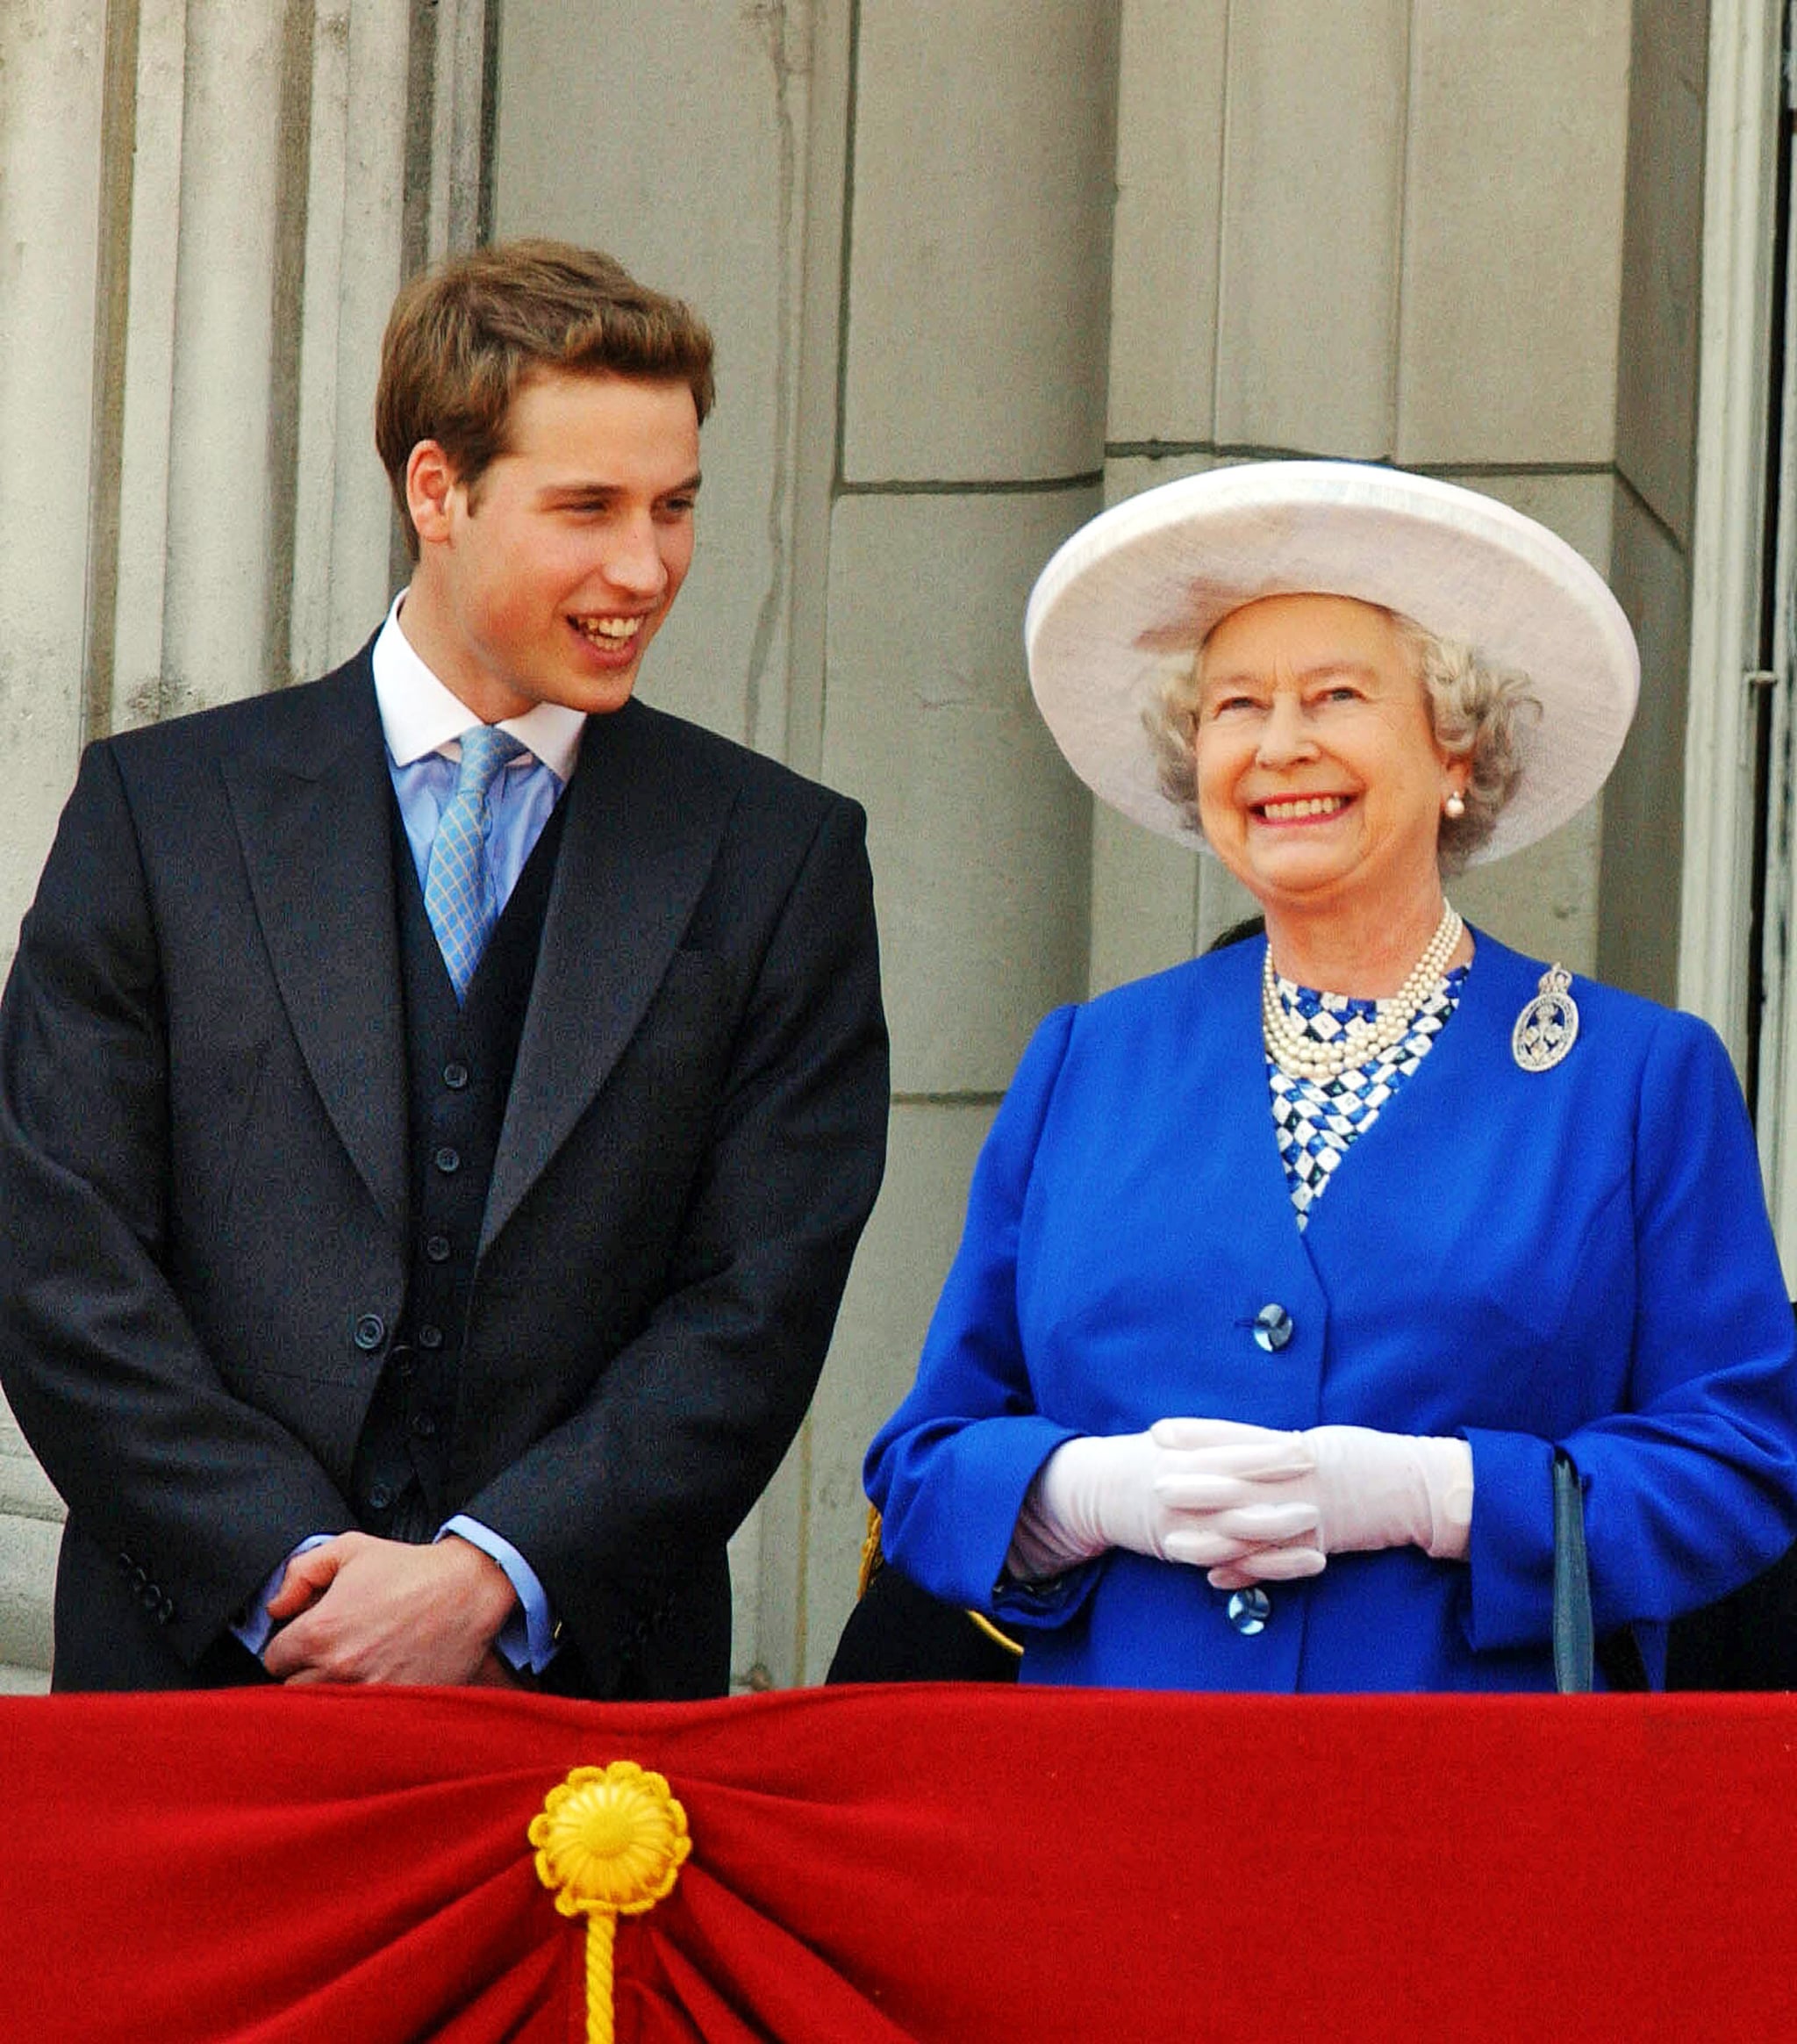 Queen Elizabeth II and Prince William in 2003